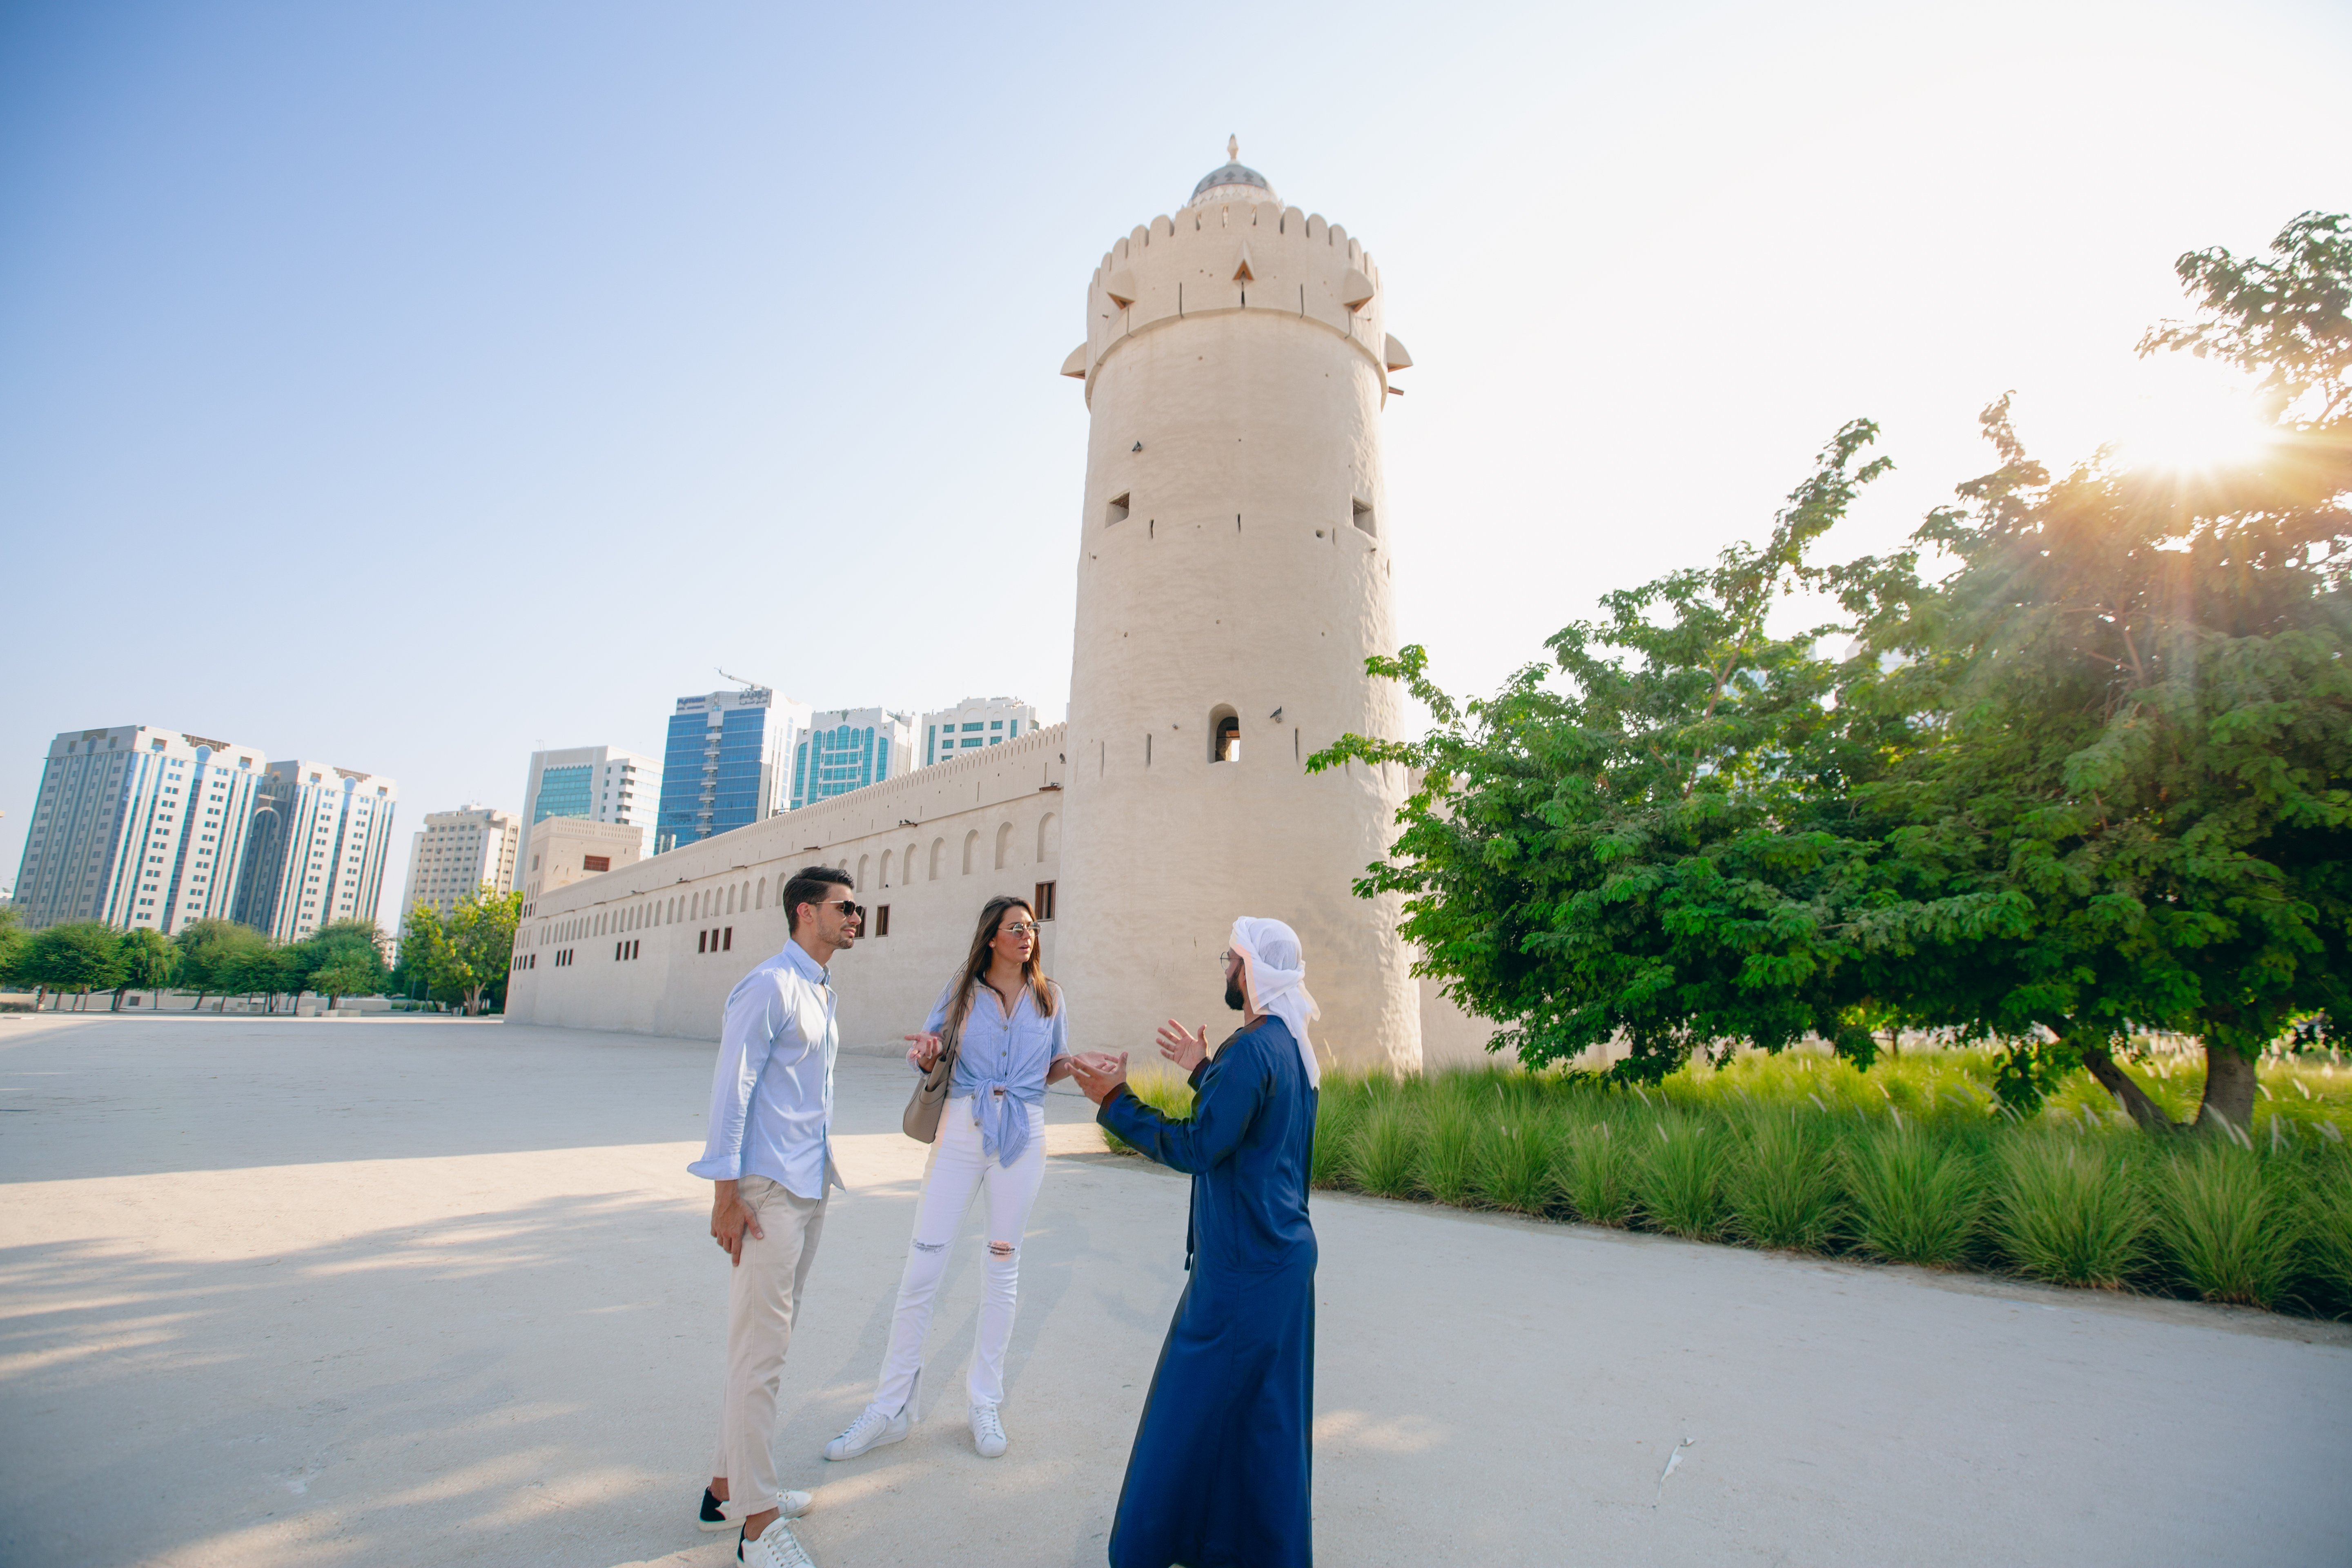 traditional emirati experiences